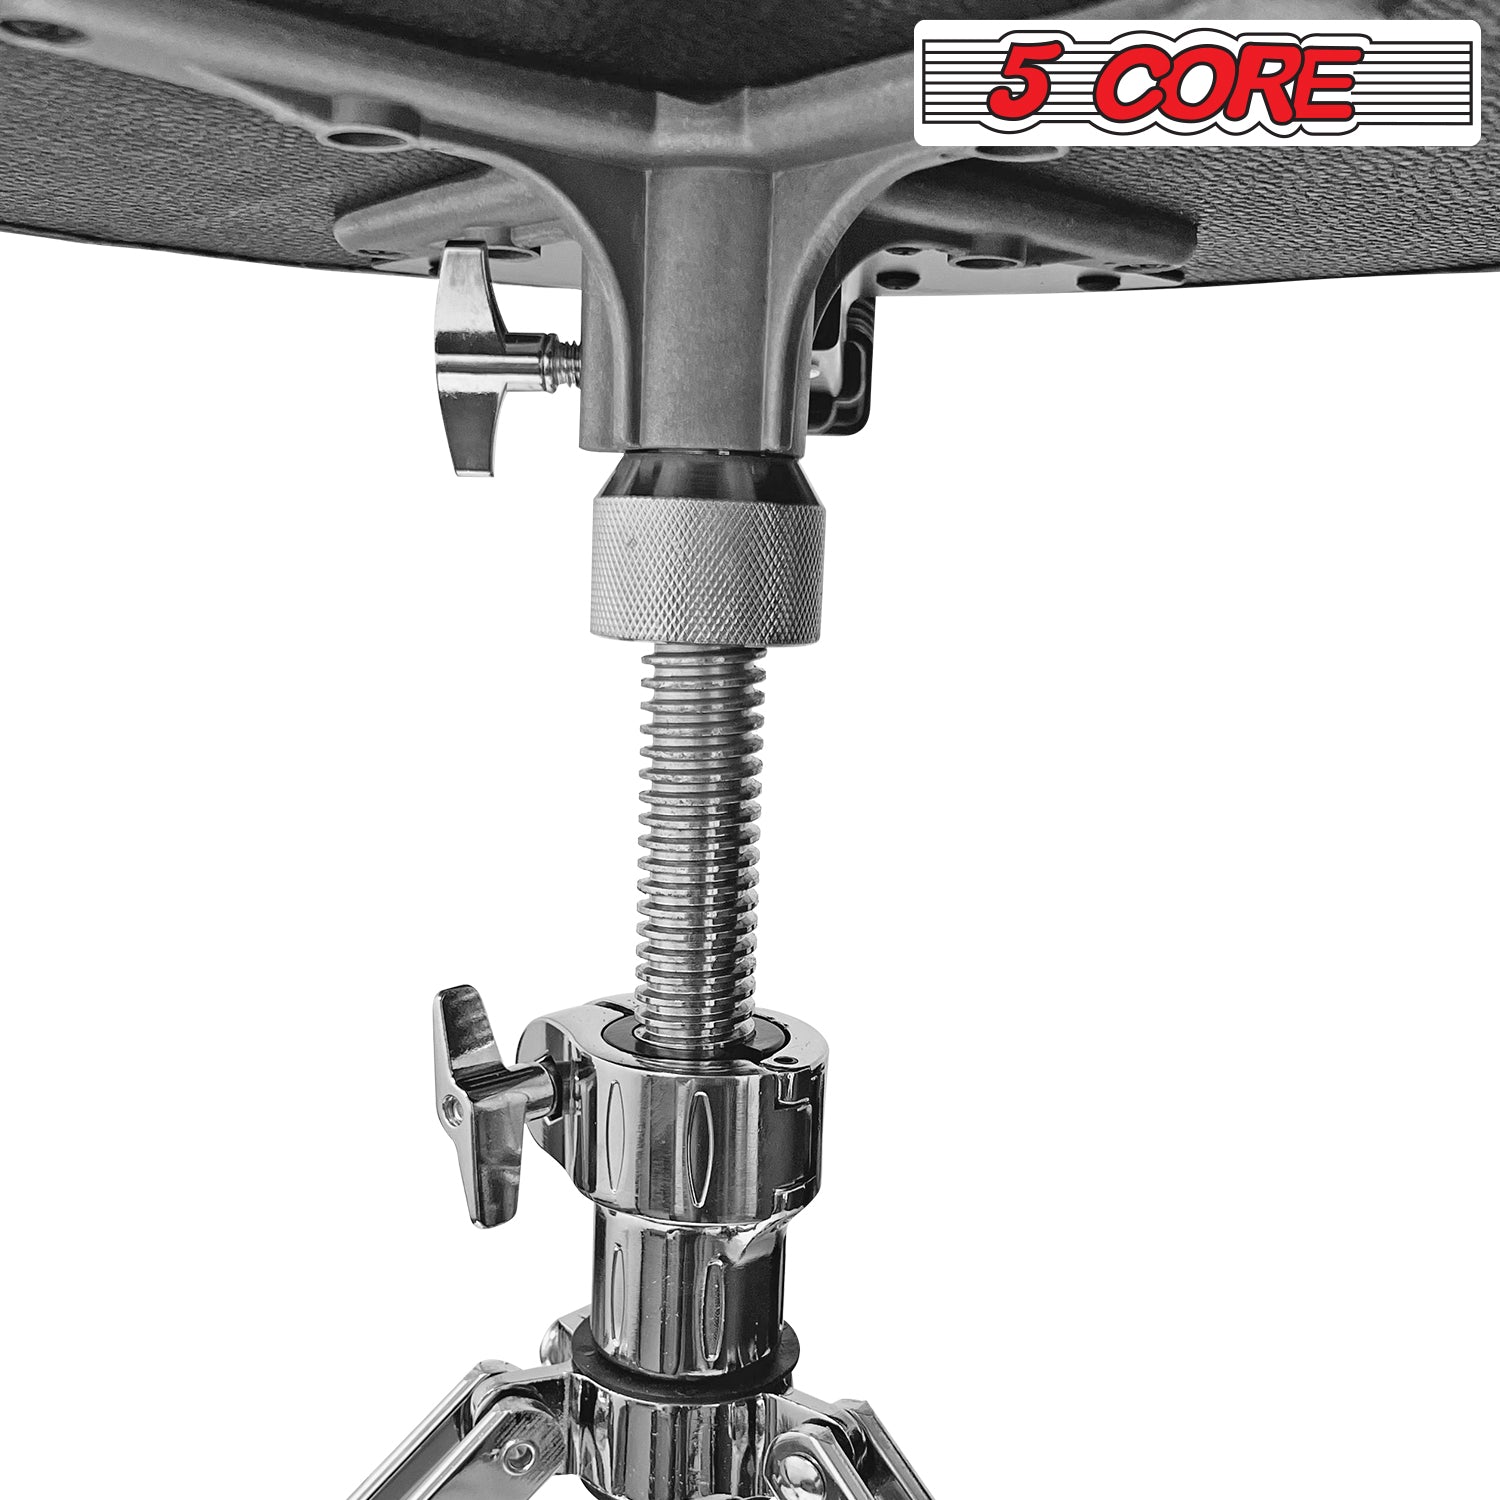 5 Core Drum stool Height Adjustable